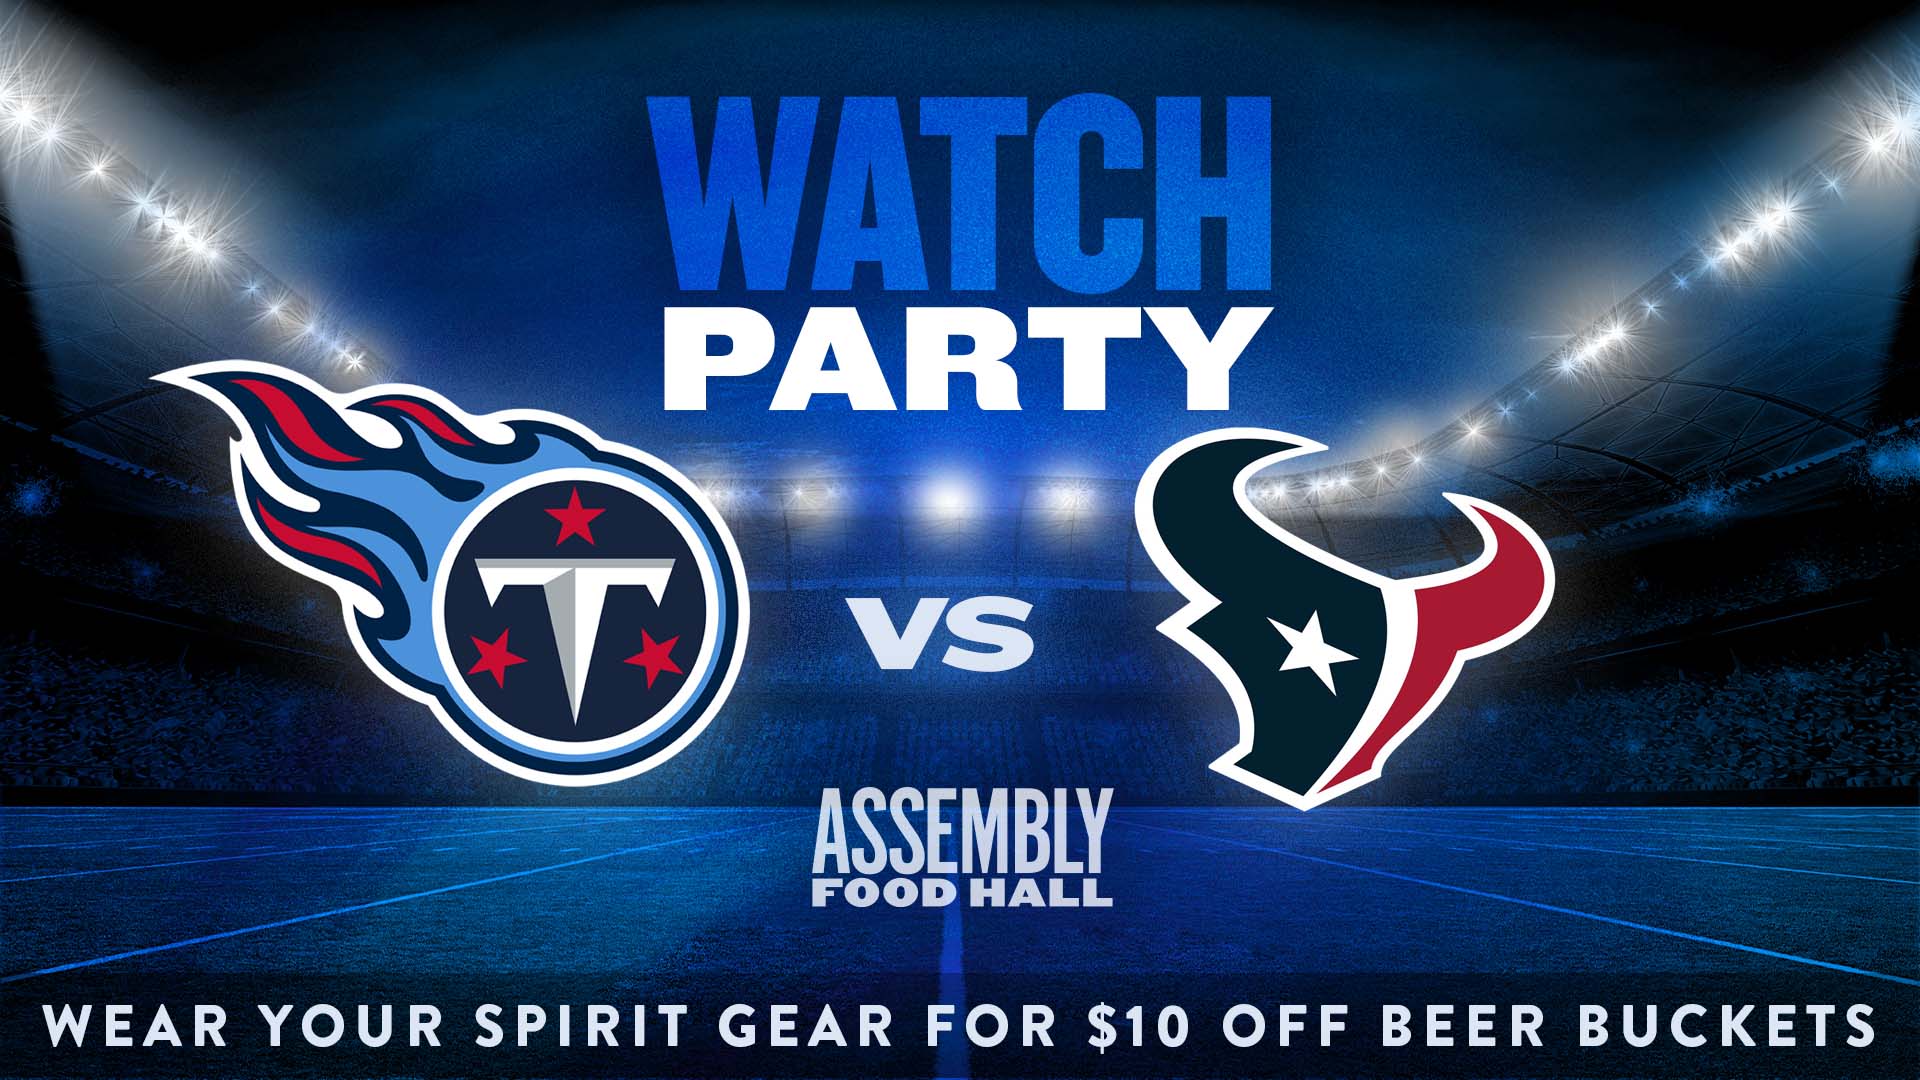 Titans vs. Texans Watch Party - hero